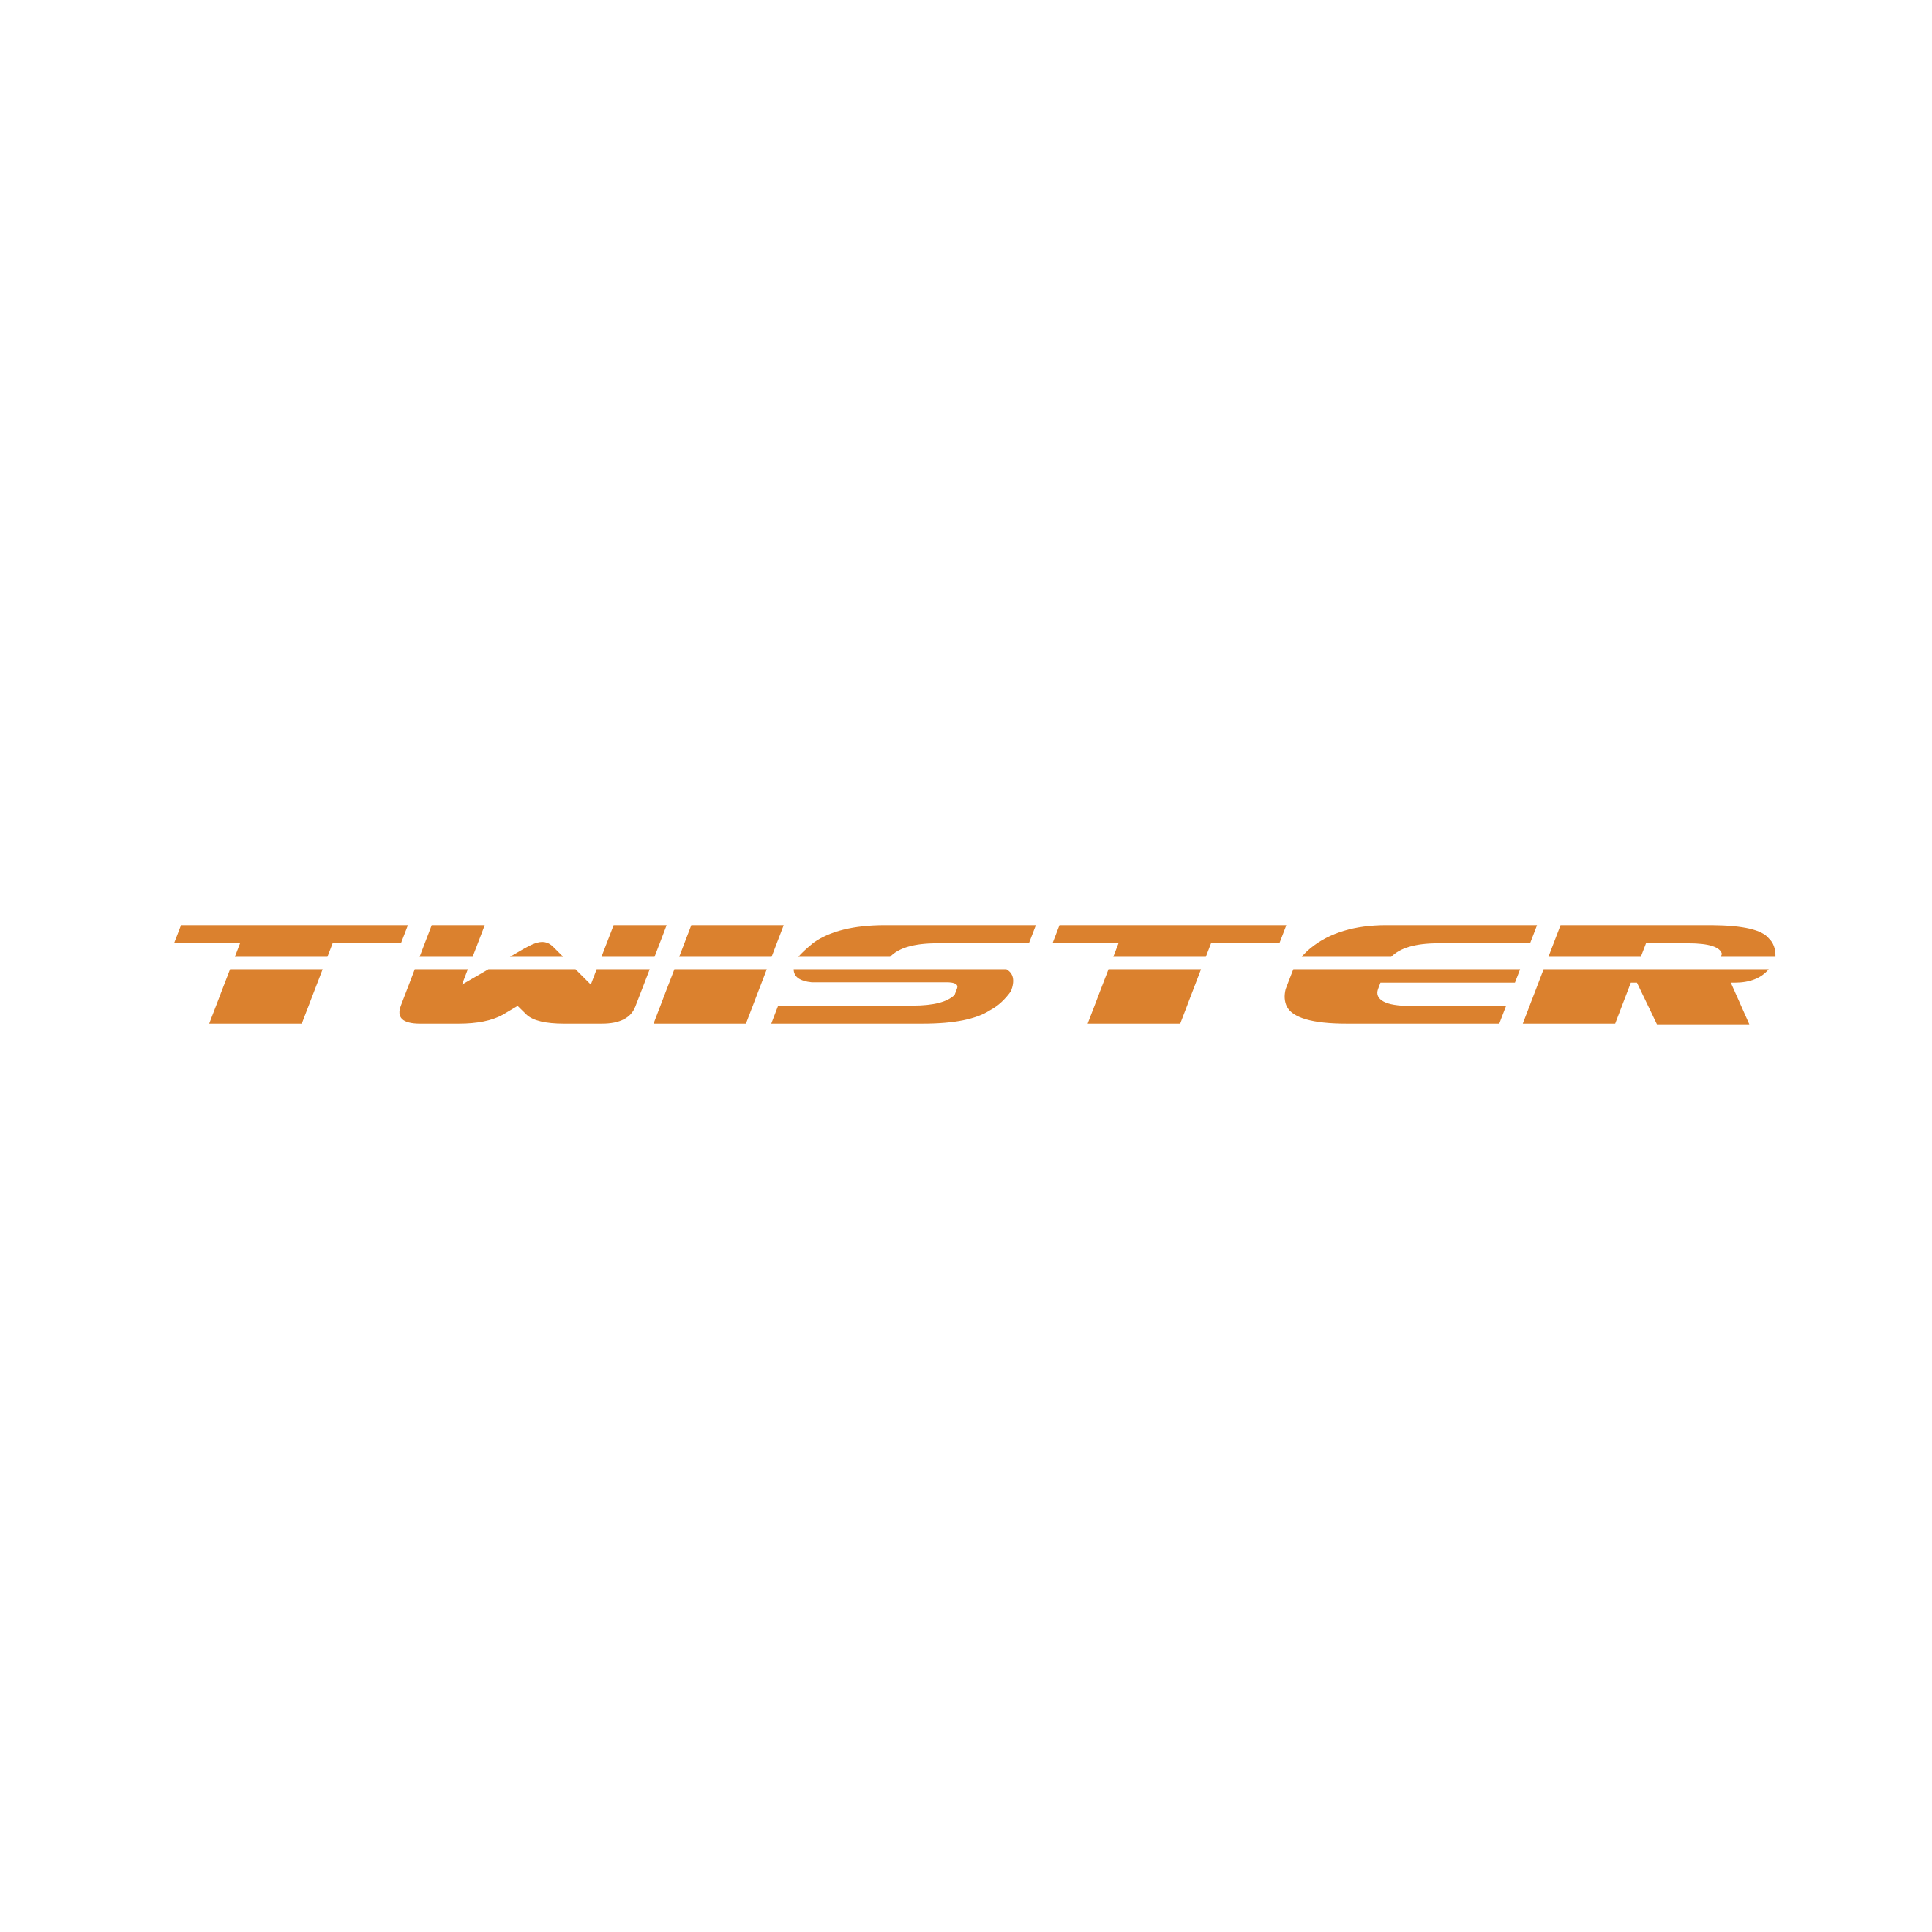 Twister Text PNG Picture pngteam.com